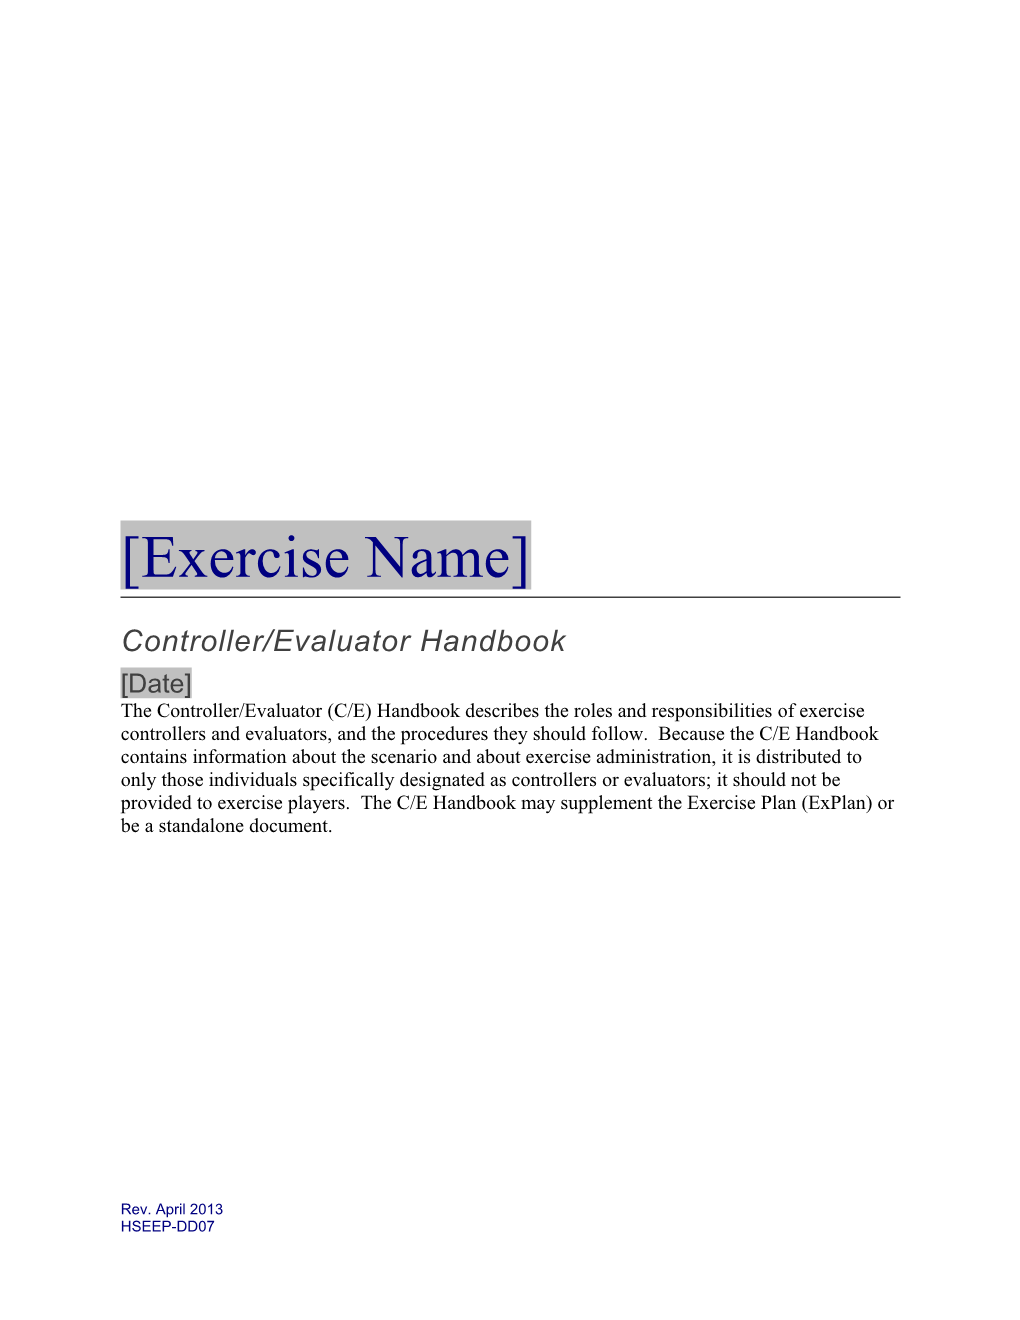 Controller/Evaluator Handbook Template